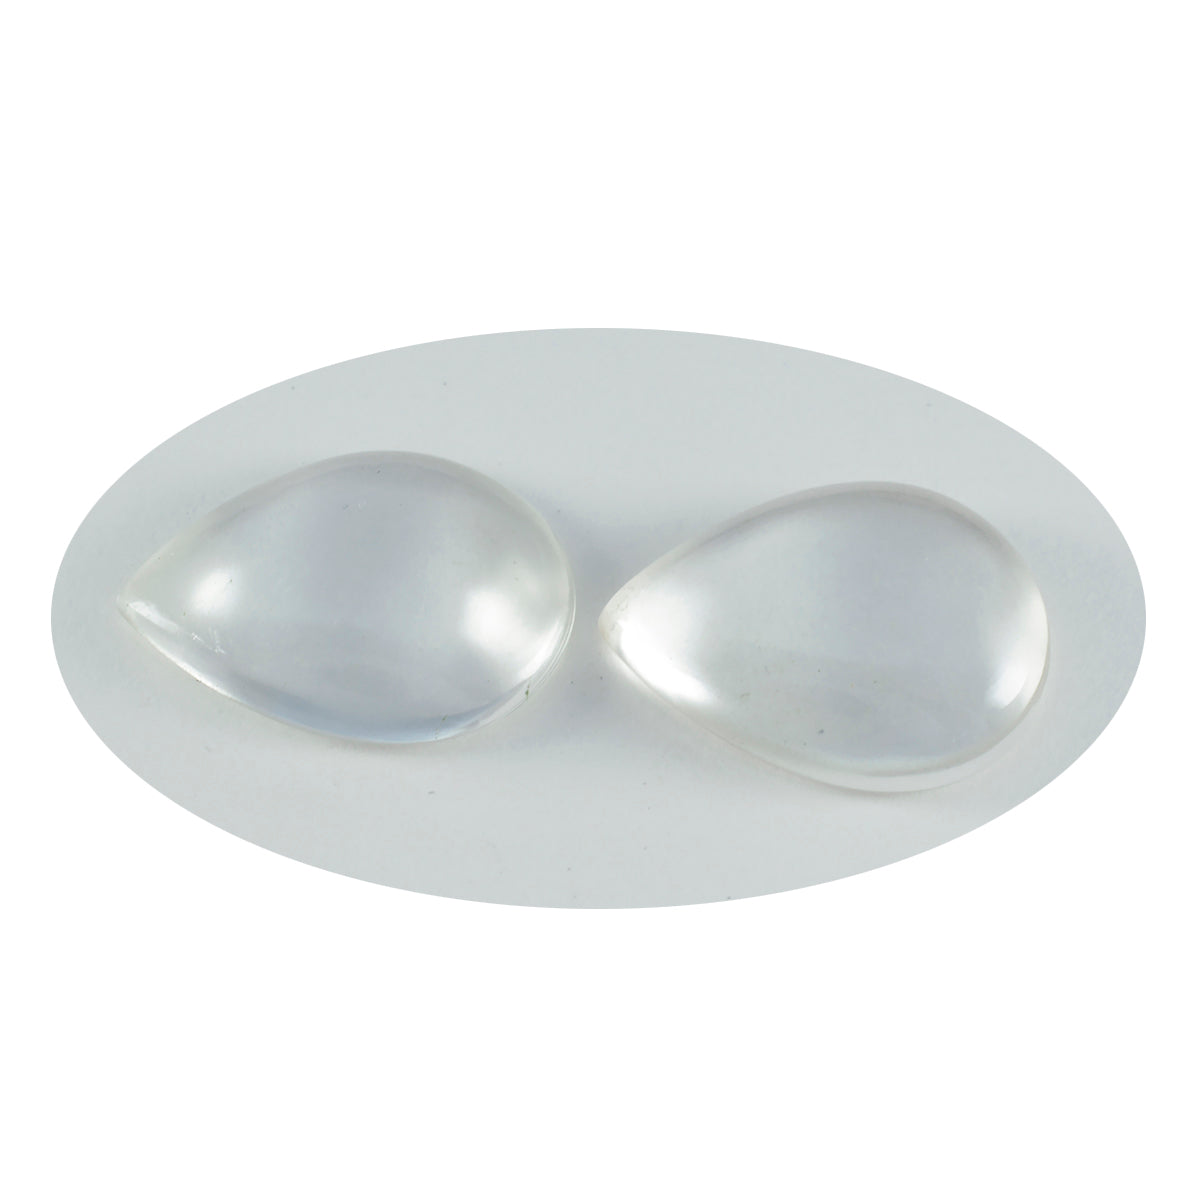 Riyogems 1PC White Crystal Quartz Cabochon 10x14 mm Pear Shape cute Quality Gemstone